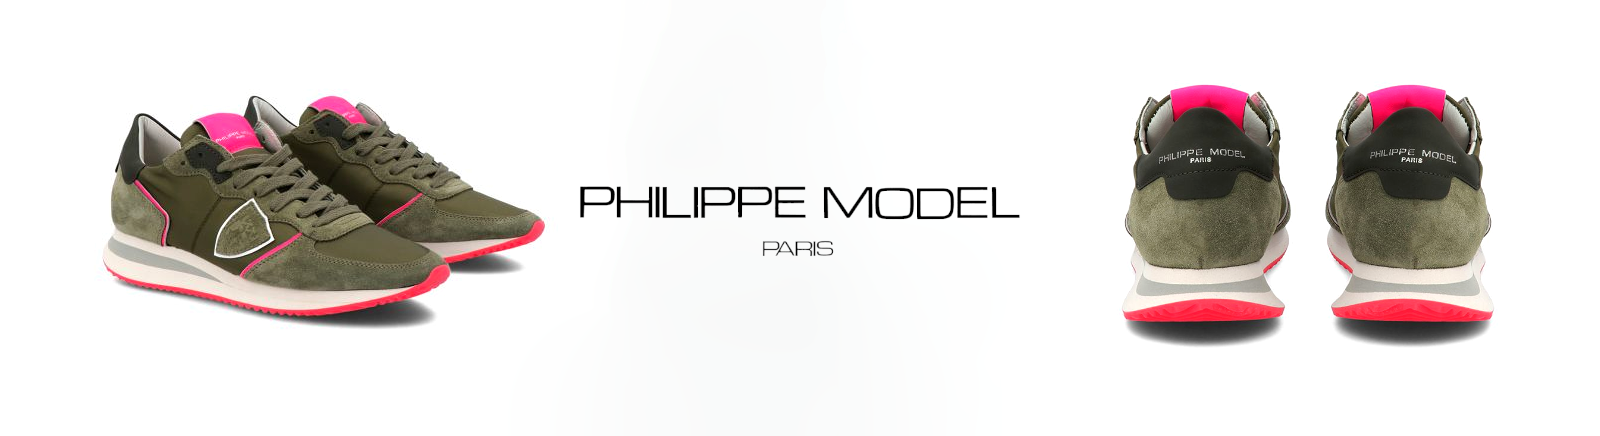 PHILIPPE MODEL Herren Schuhe kaufen im GISY Online Shop